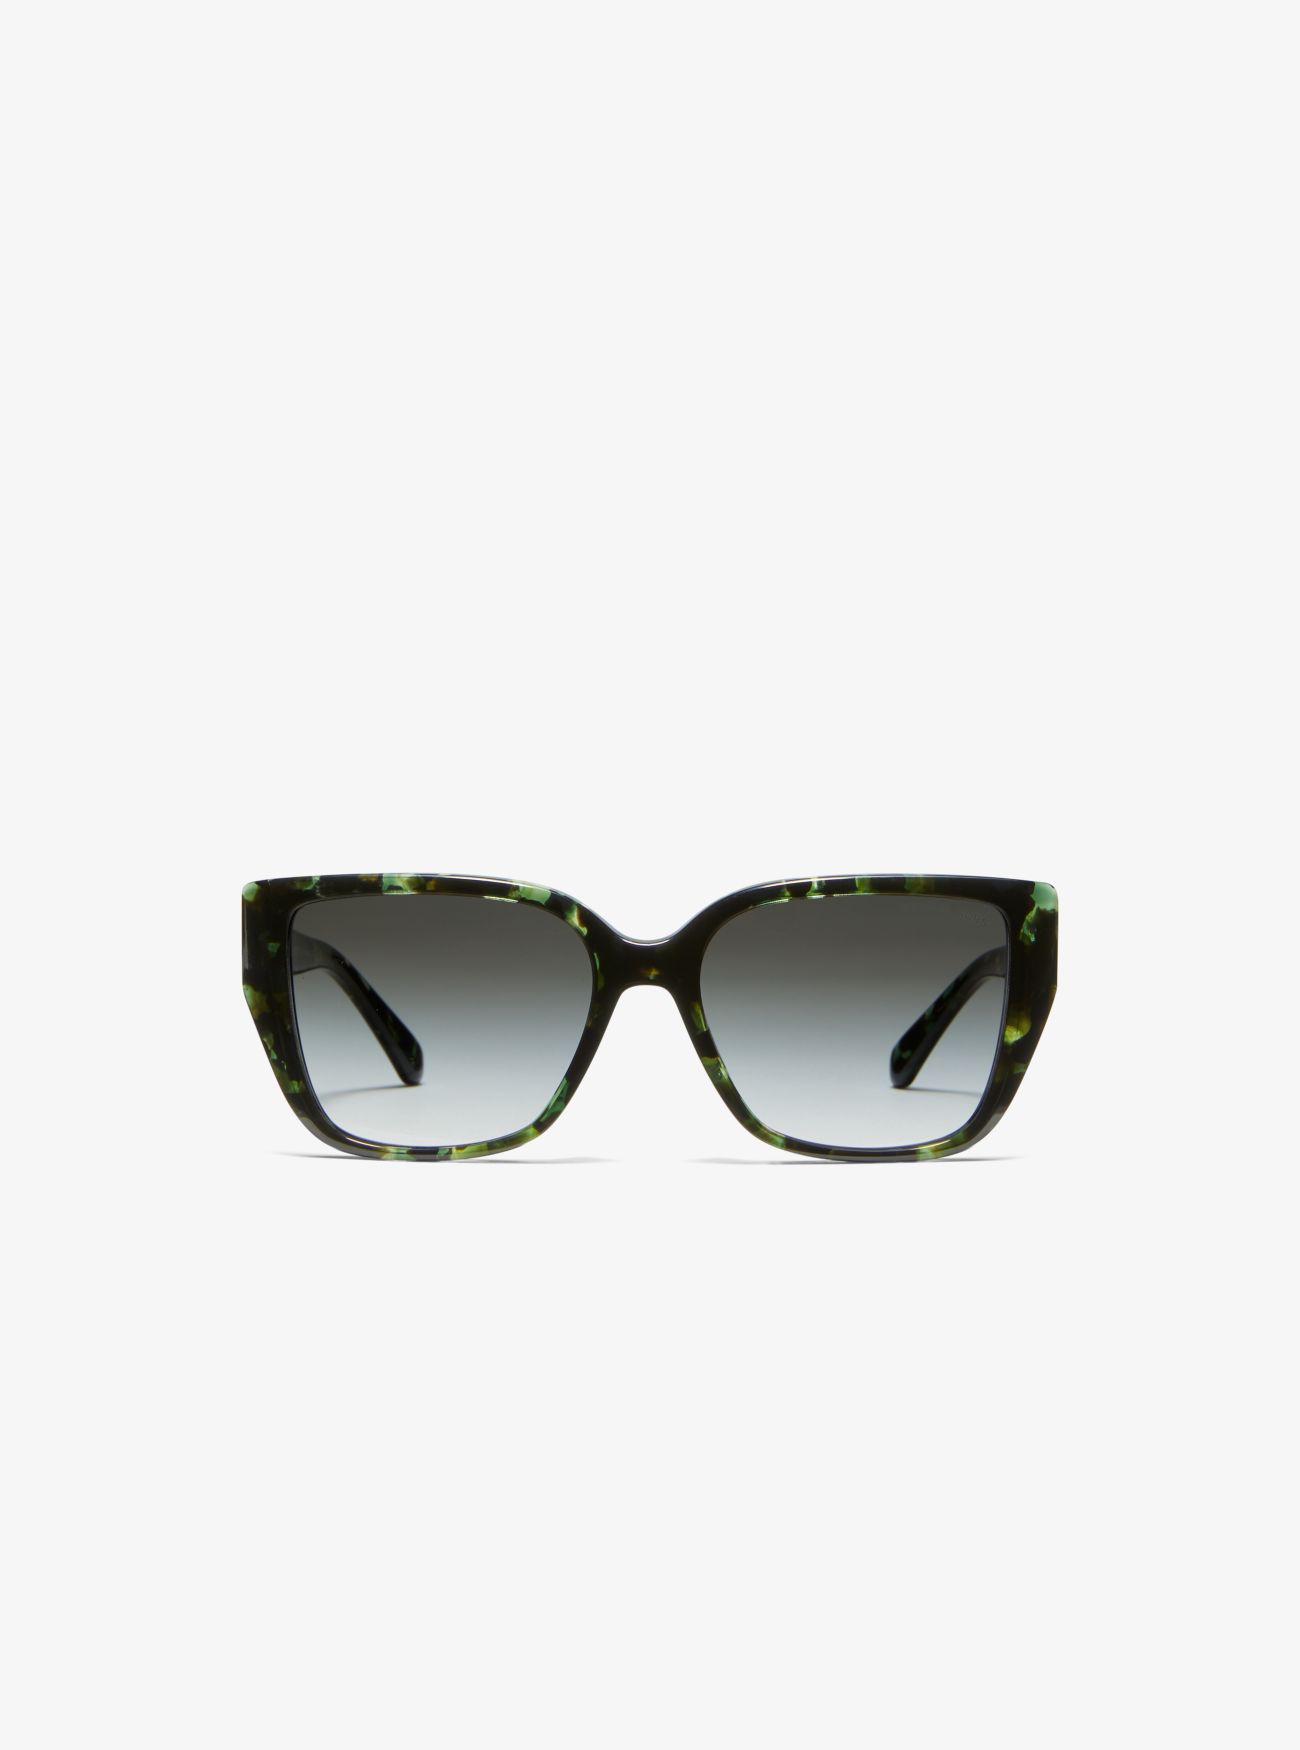 MK Acadia Sunglasses - Amazon Green - Michael Kors